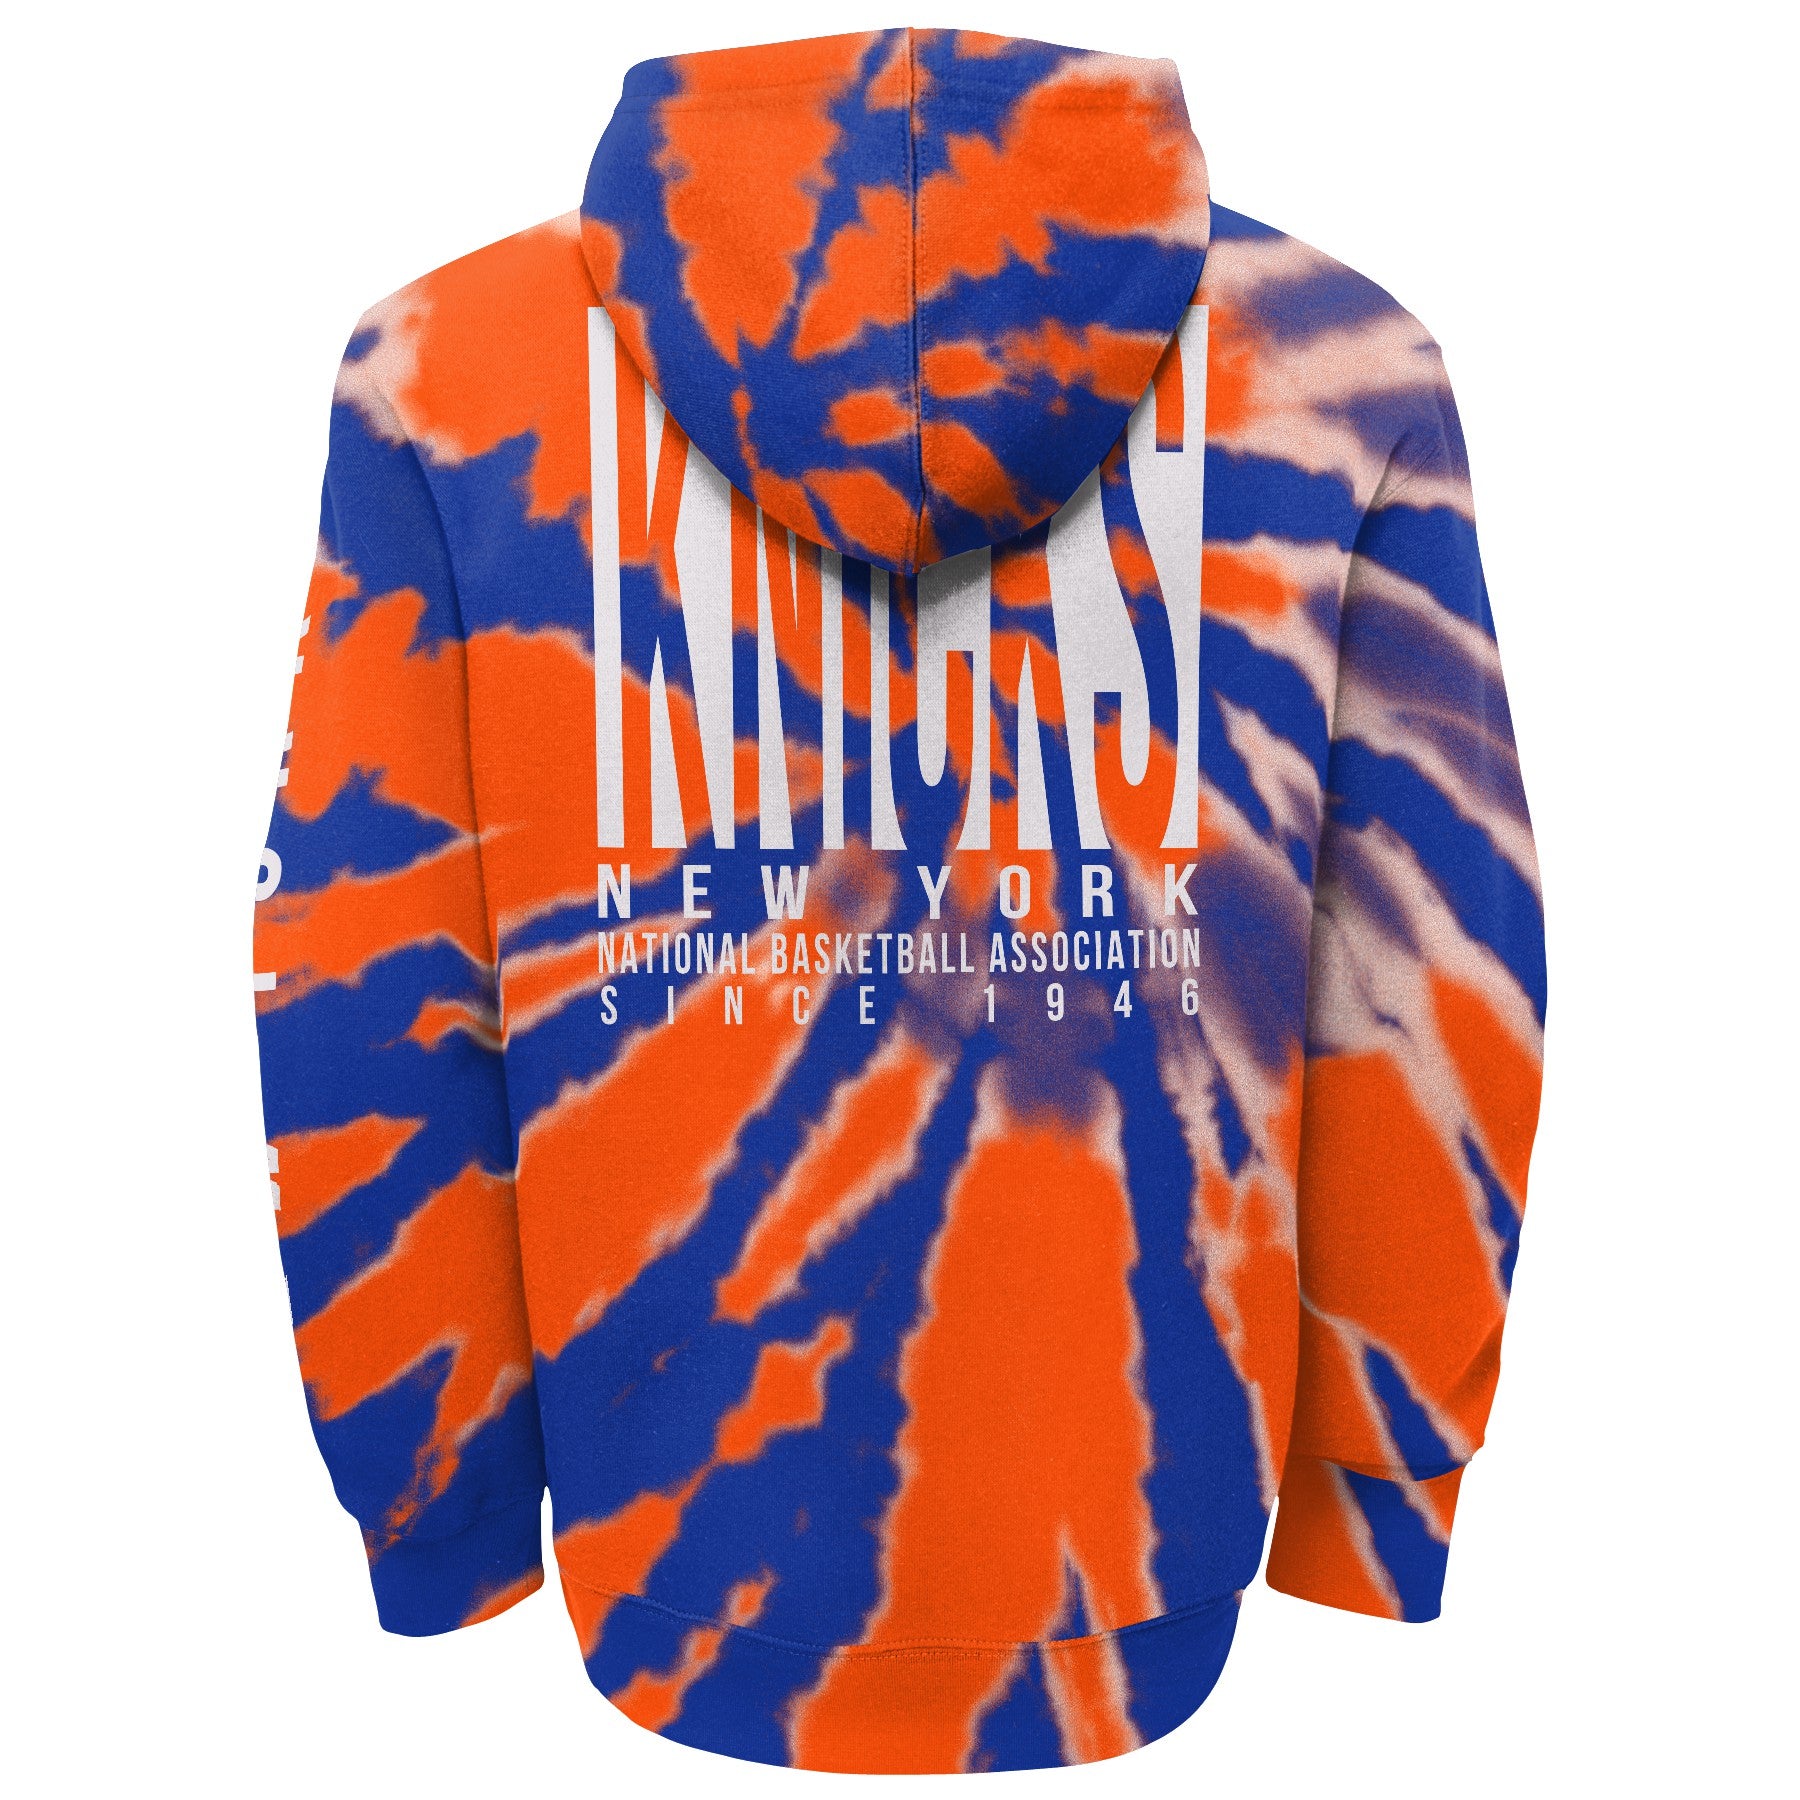 Nba New York Knicks Youth Poly Hooded Sweatshirt : Target